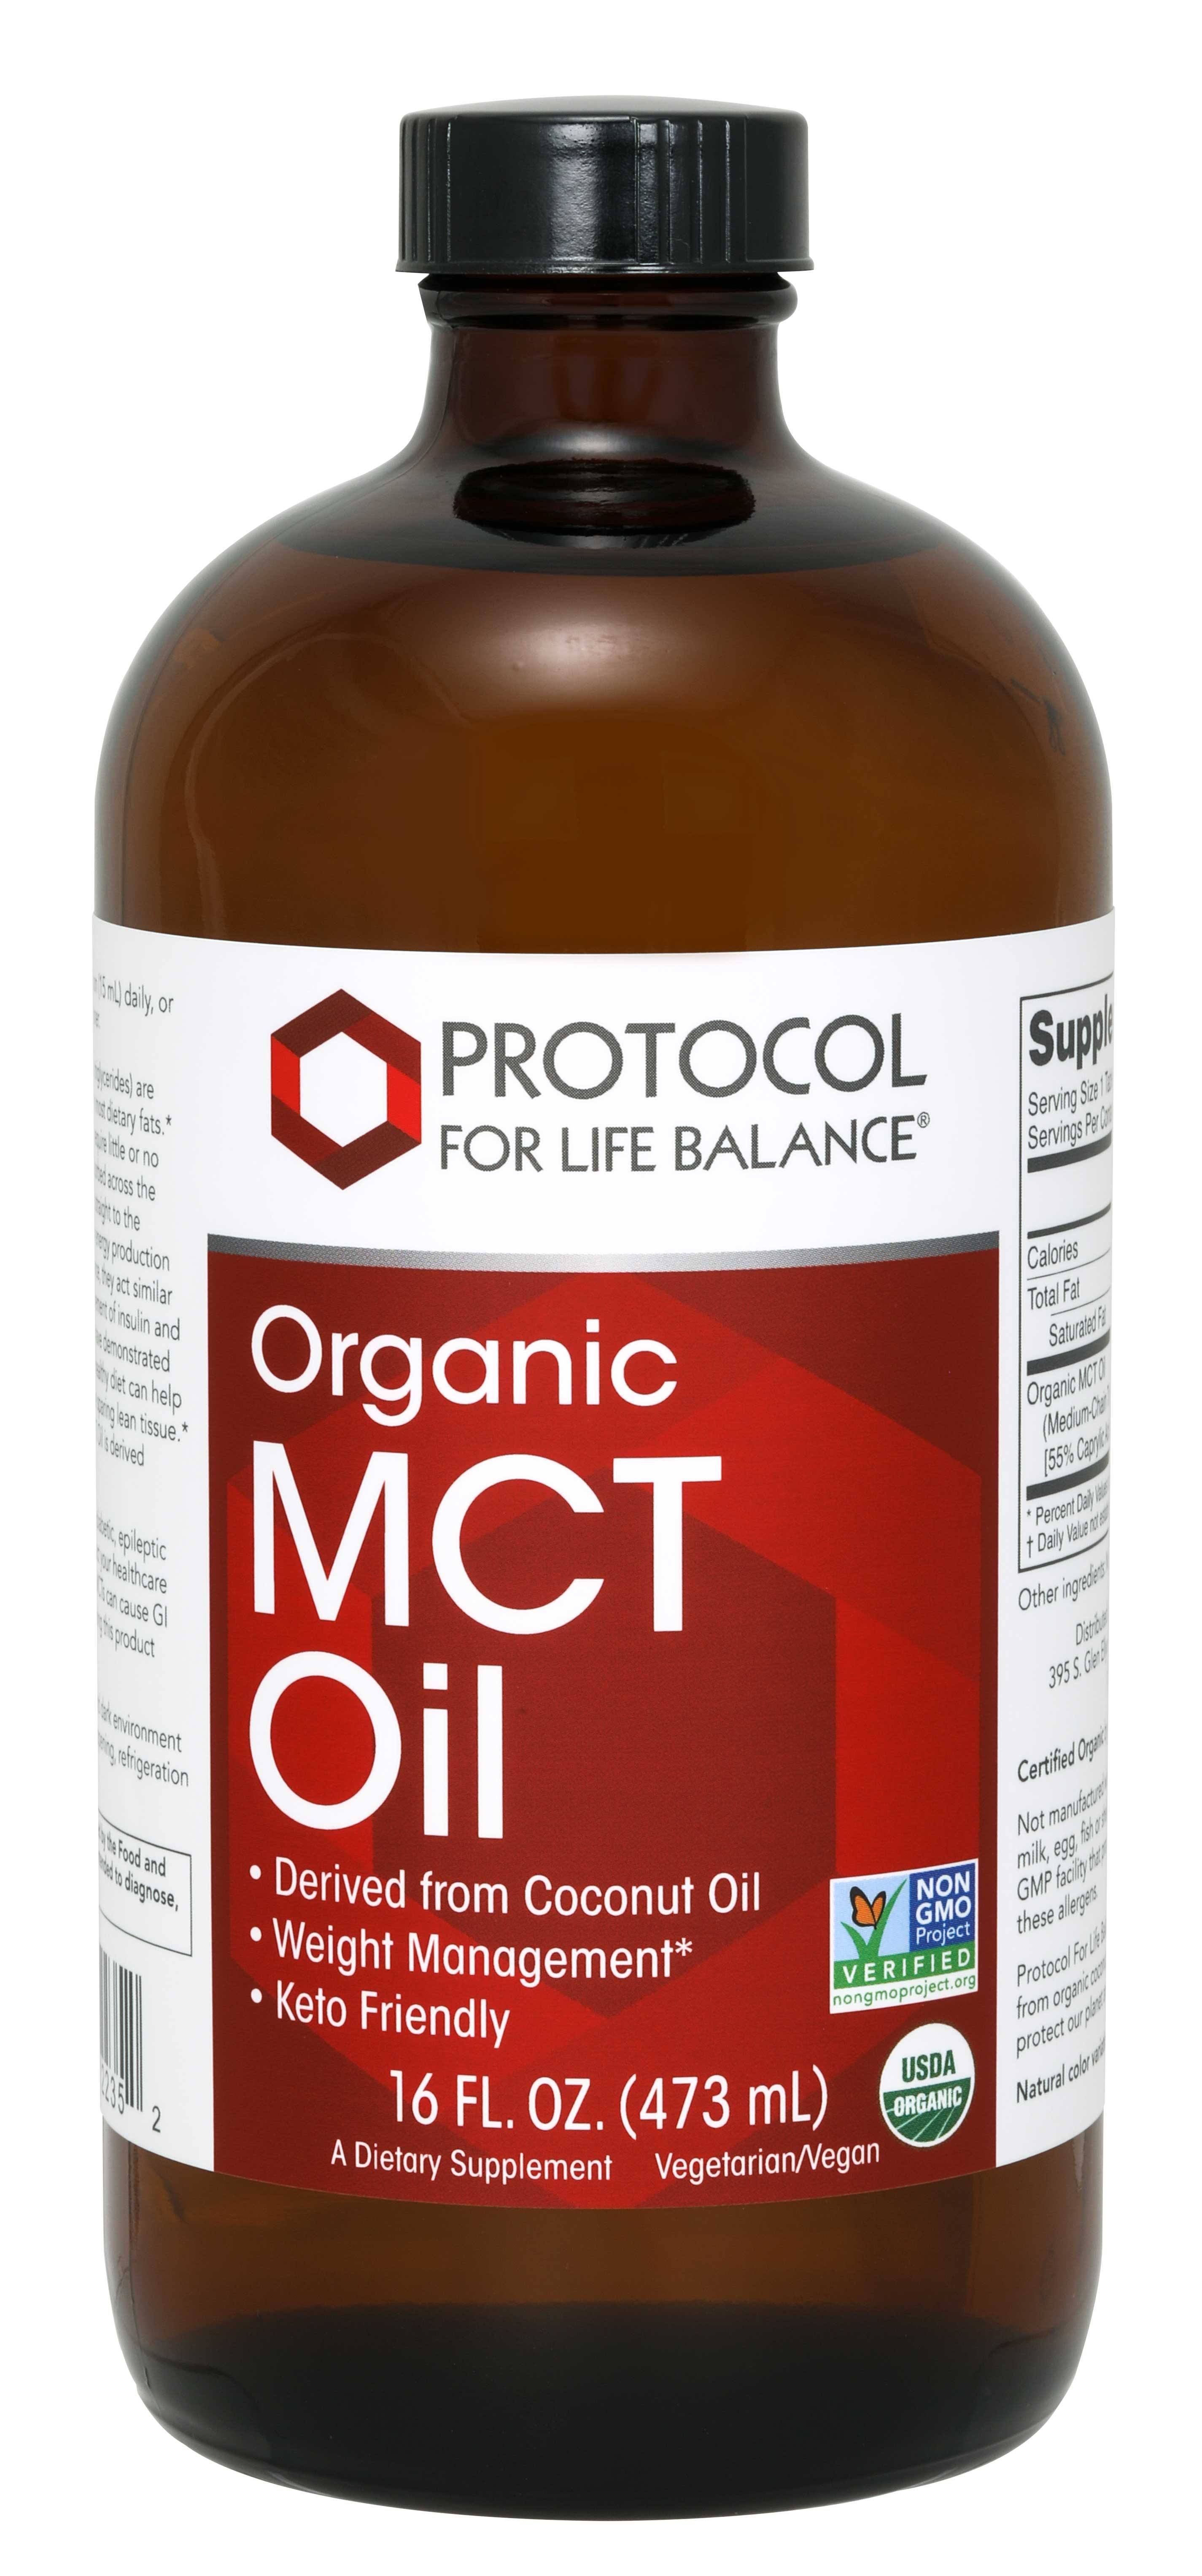 Protocol for Life Balance Organic MCT Oil - 16 fl oz (473 ml)